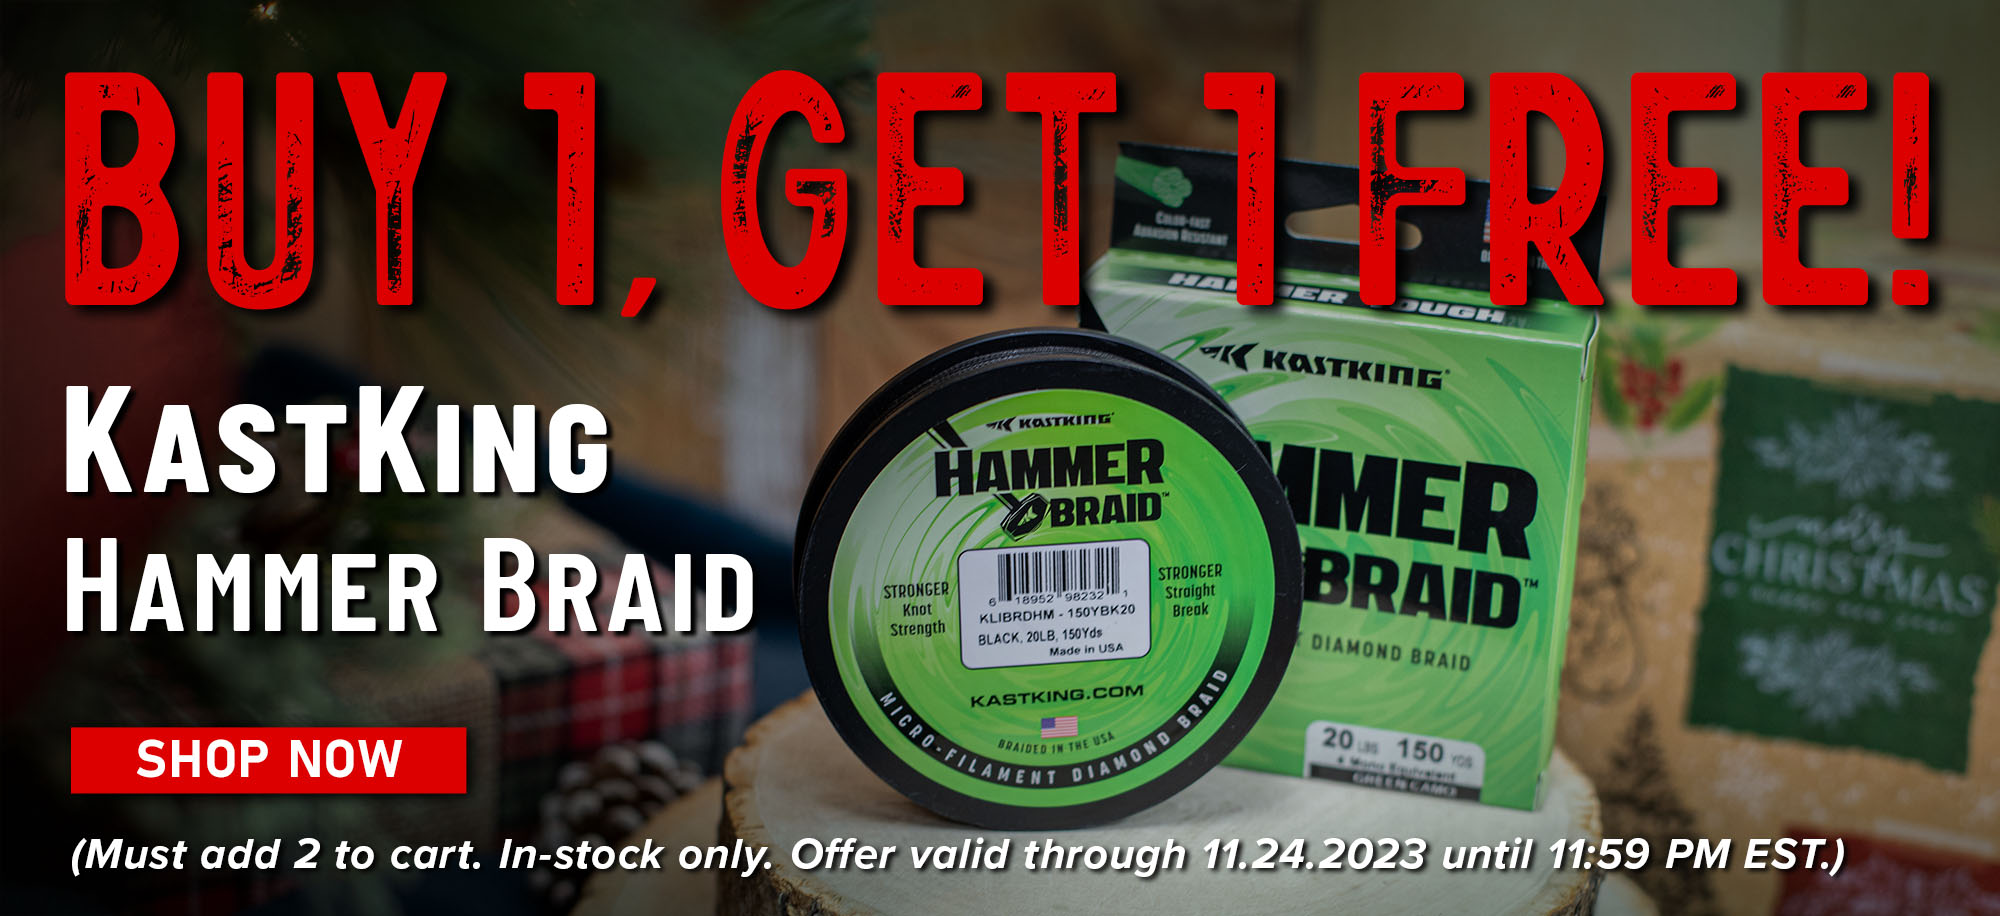 Buy 1, Get 1 Free! KastKing Kestrel Hammer Braid Shop Now (Must add 2 to cart. In-stock only. Offer valid 11.23.2023 until 11:59 PM EST.)